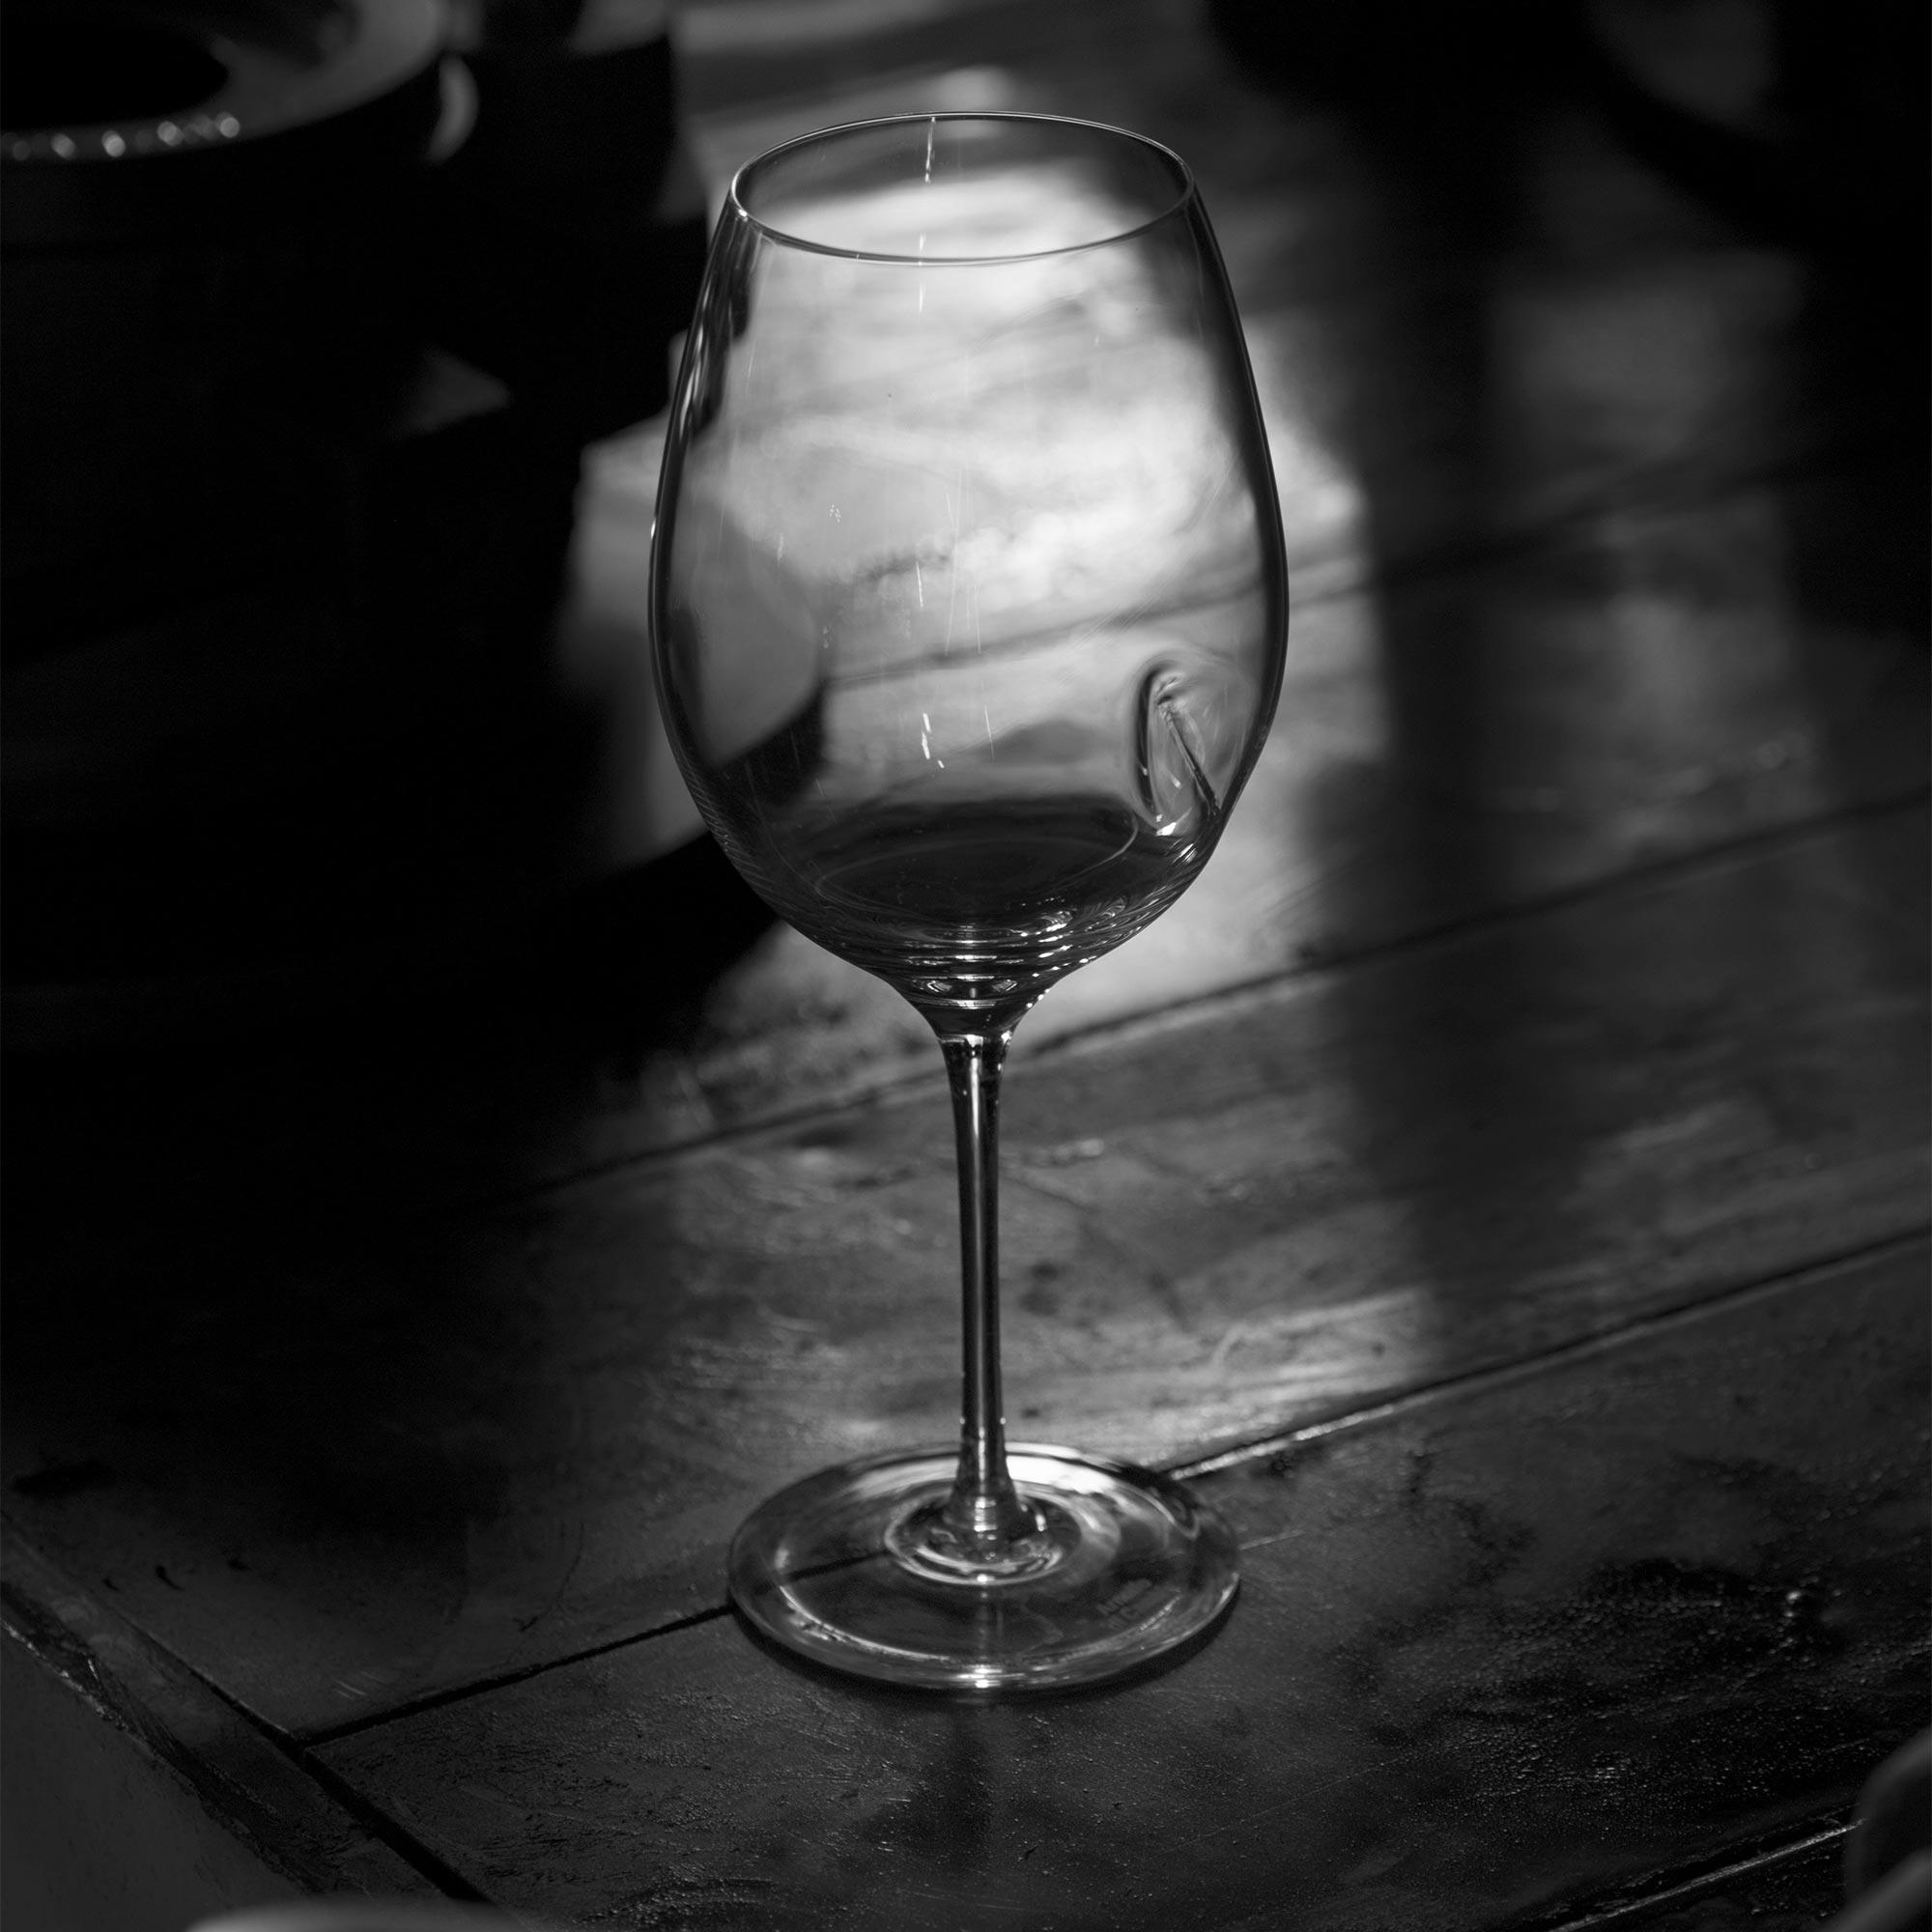 Roberto Cavalli, Monogramma Gold Set 2 Wine Glass – Induplano